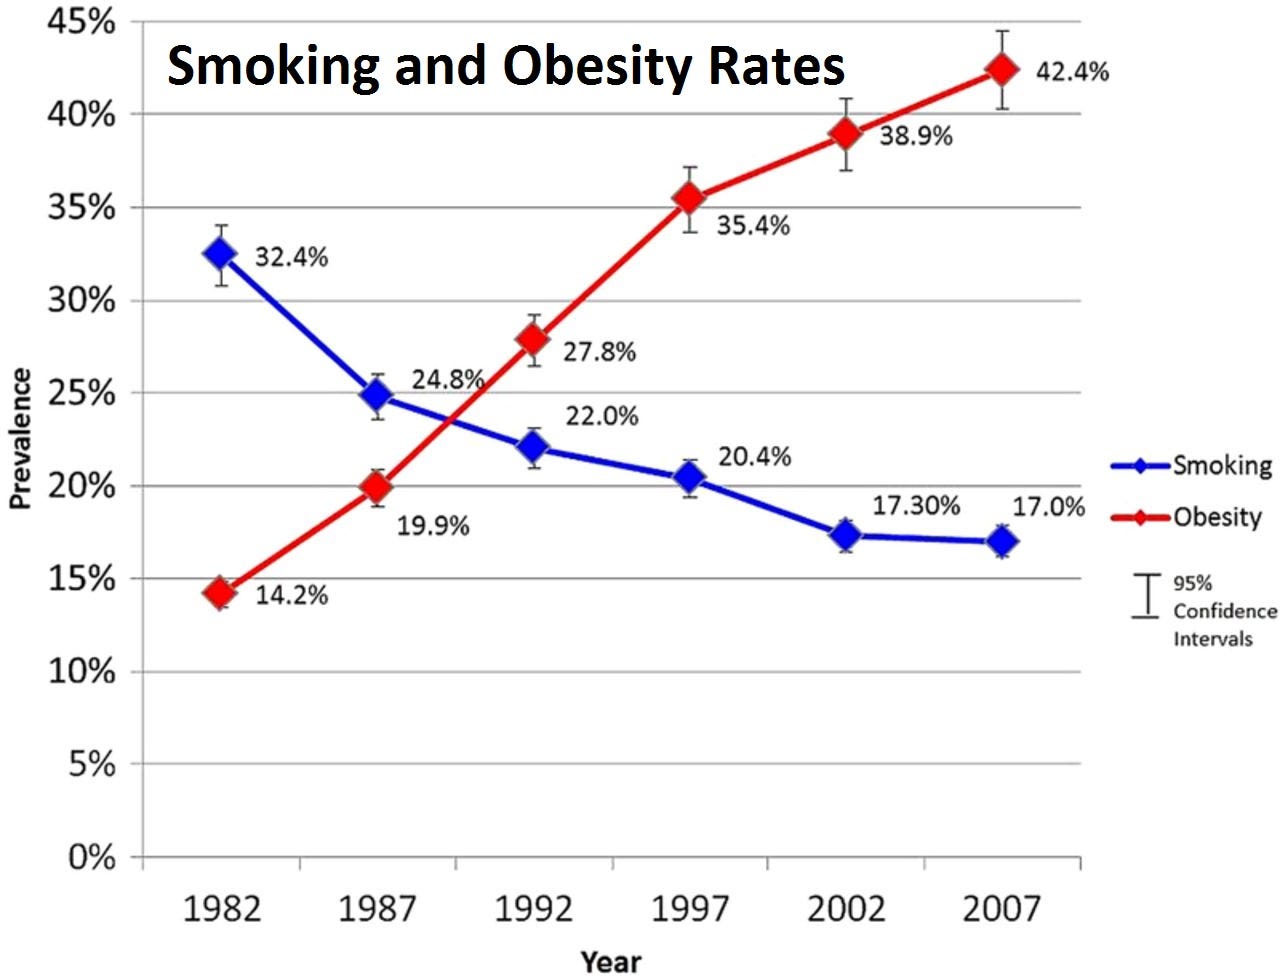 Smoking and Obesity Prevalence